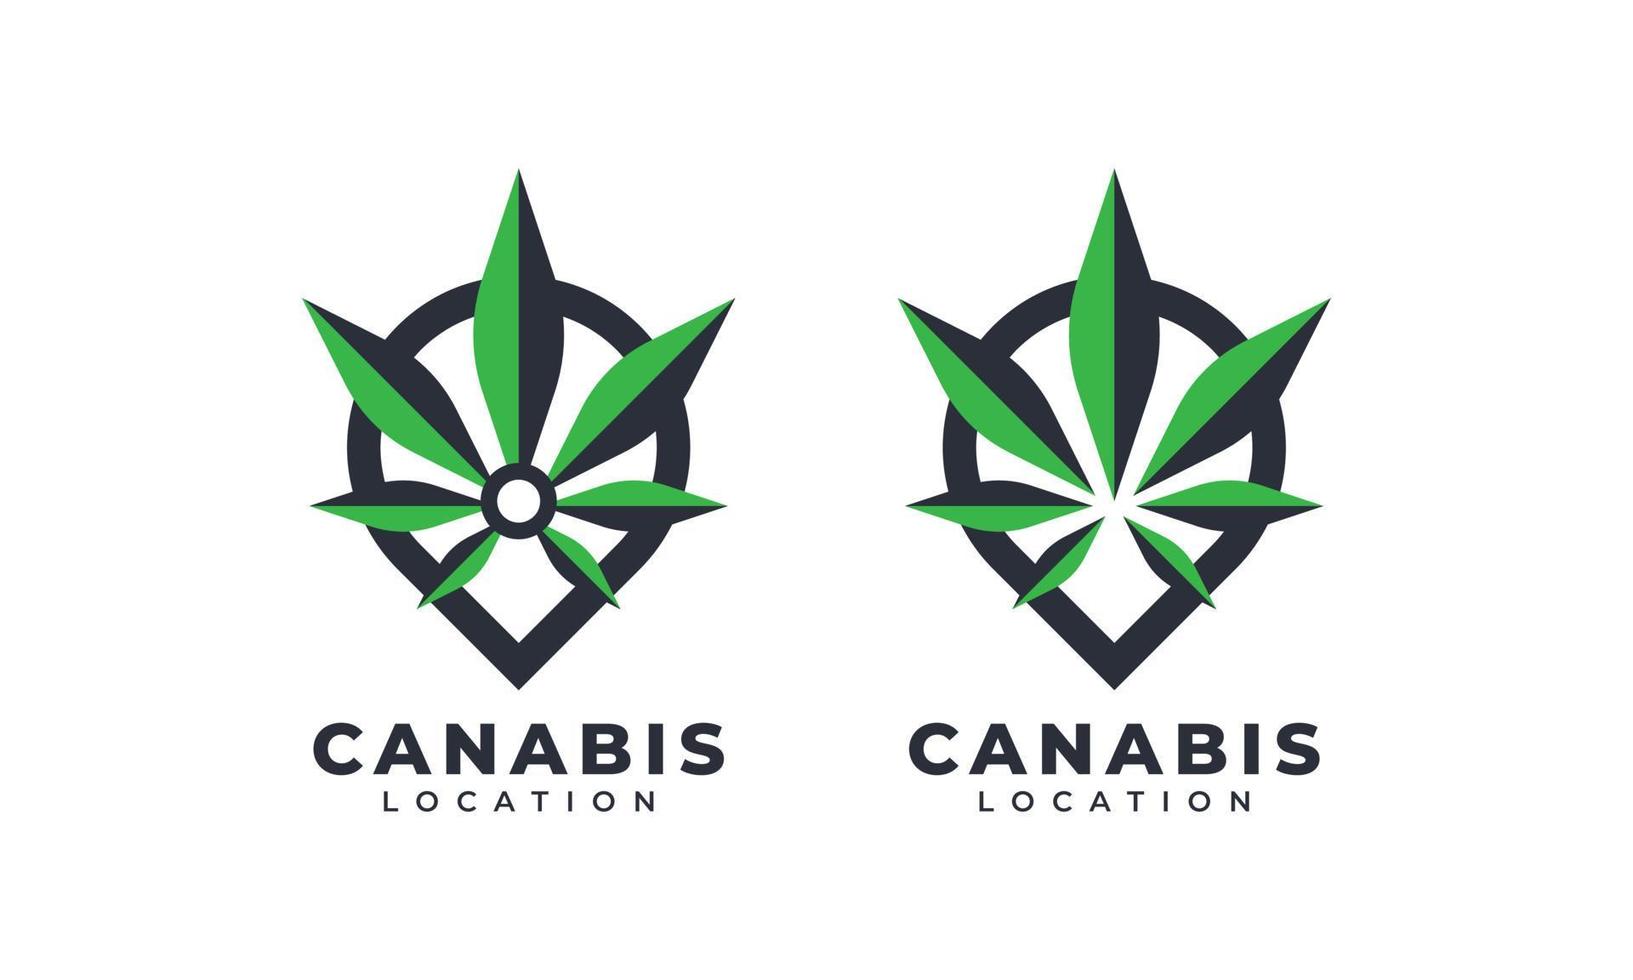 Cannabis Marijuana Location logo. Map Pin Combined with Cannabis Leaf Icon Vector Illustration